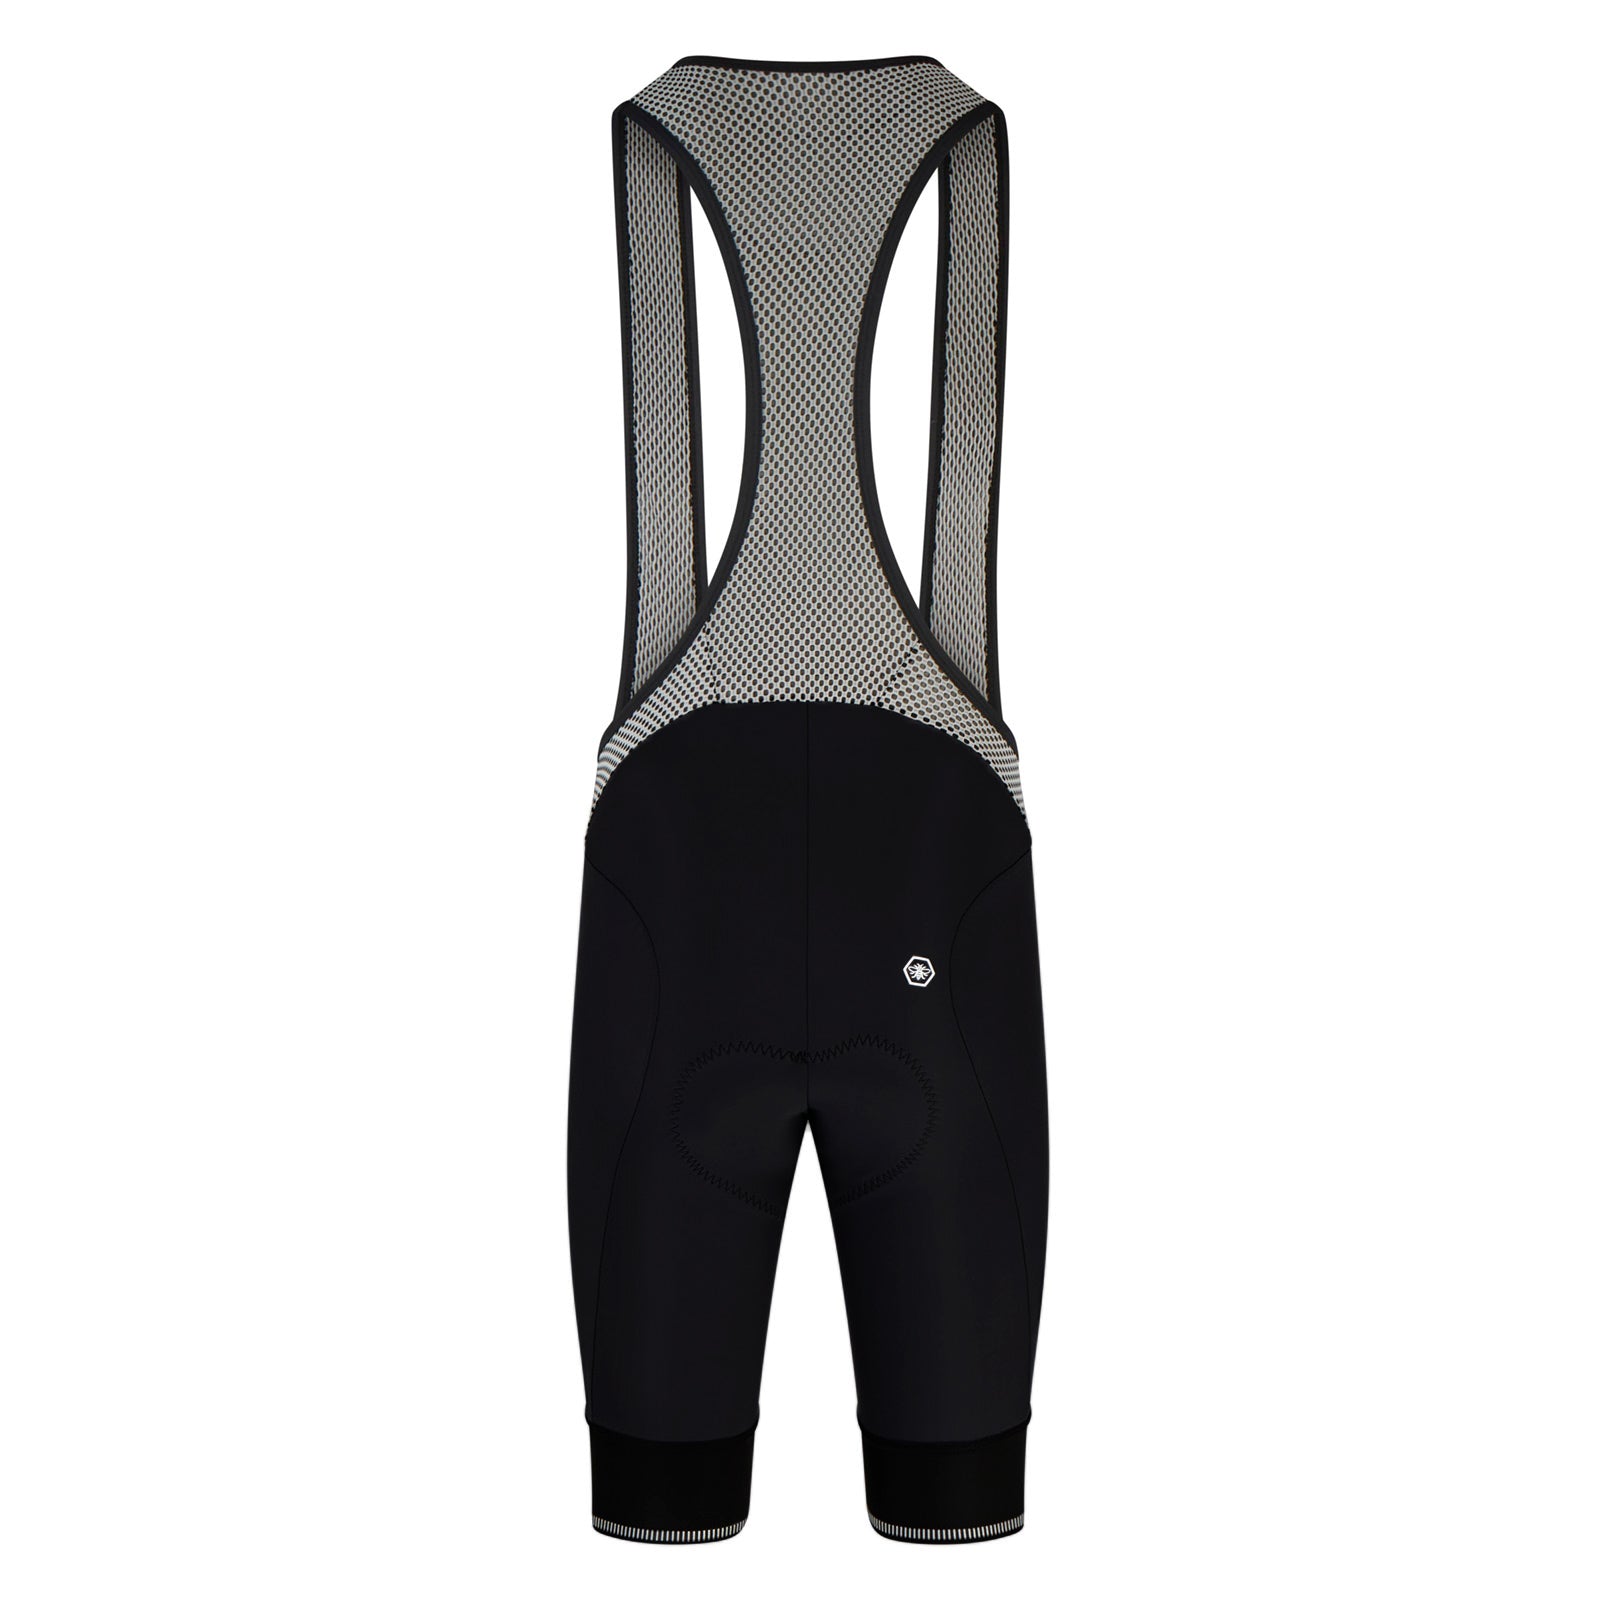 Perform Carbon Bib Shorts - Black - Lusso Cycle Wear